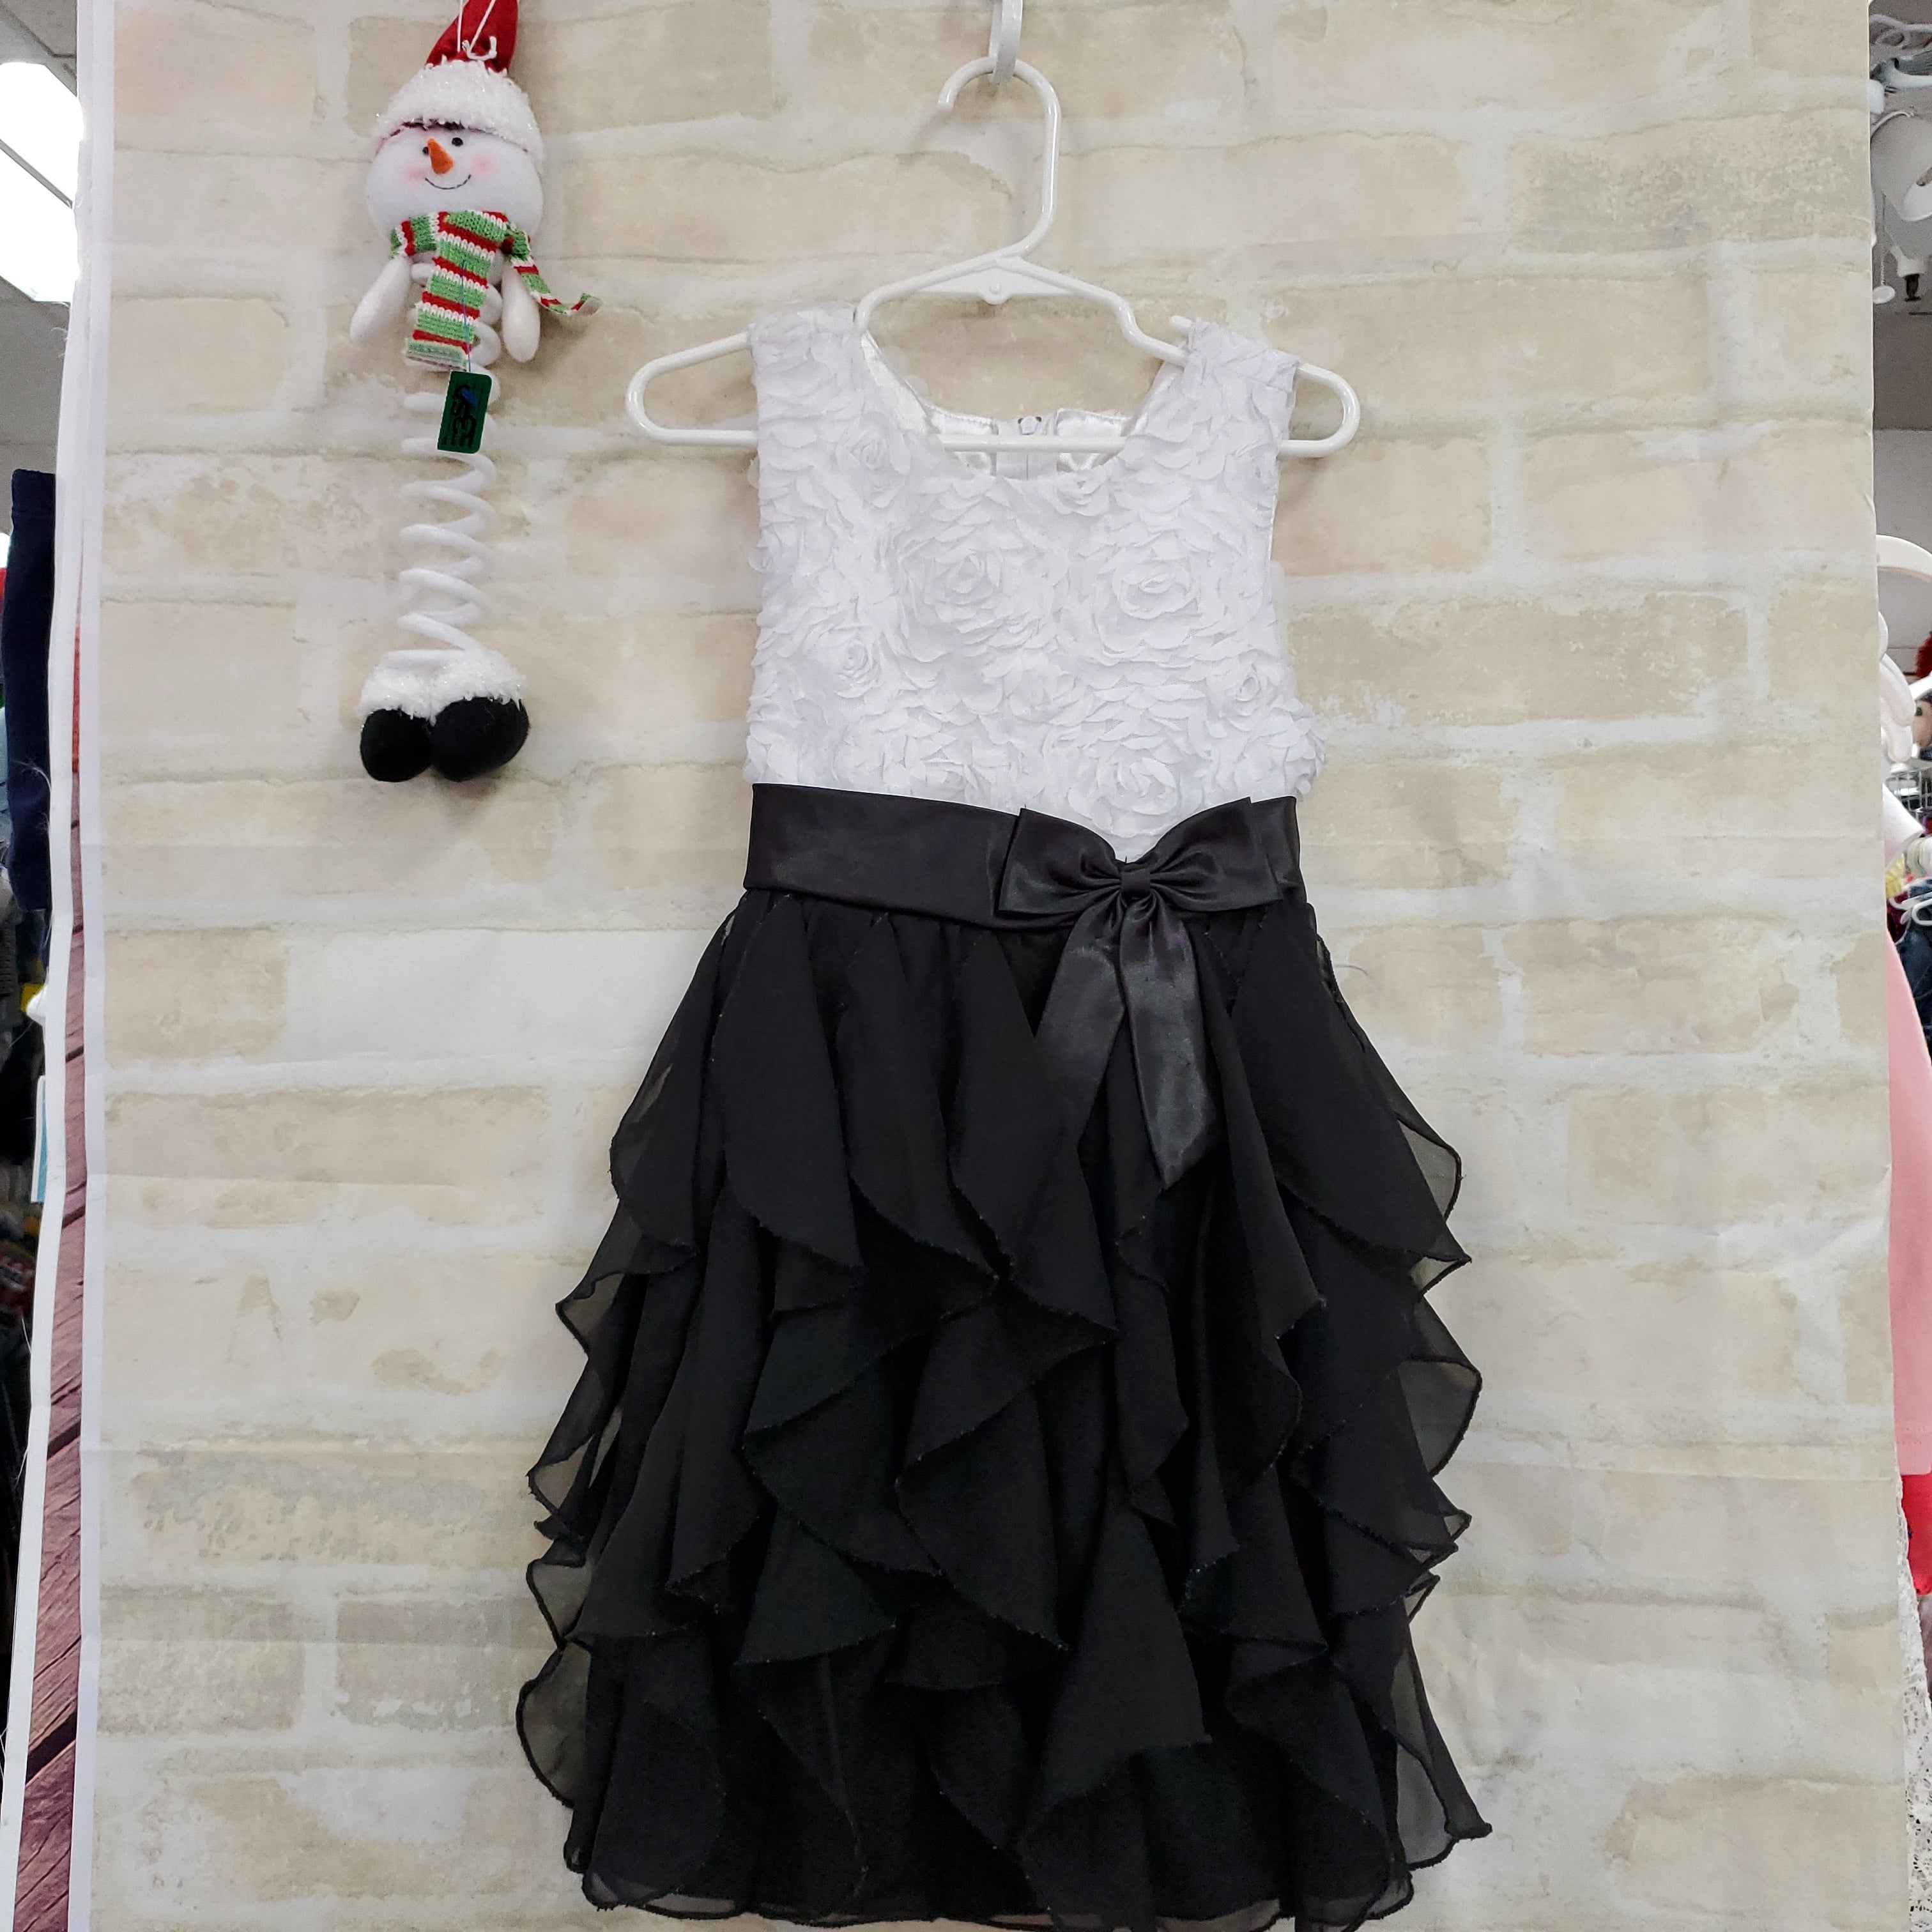 American Princess girls dress white flower top black ruffled skirt sleeveless zips 6x